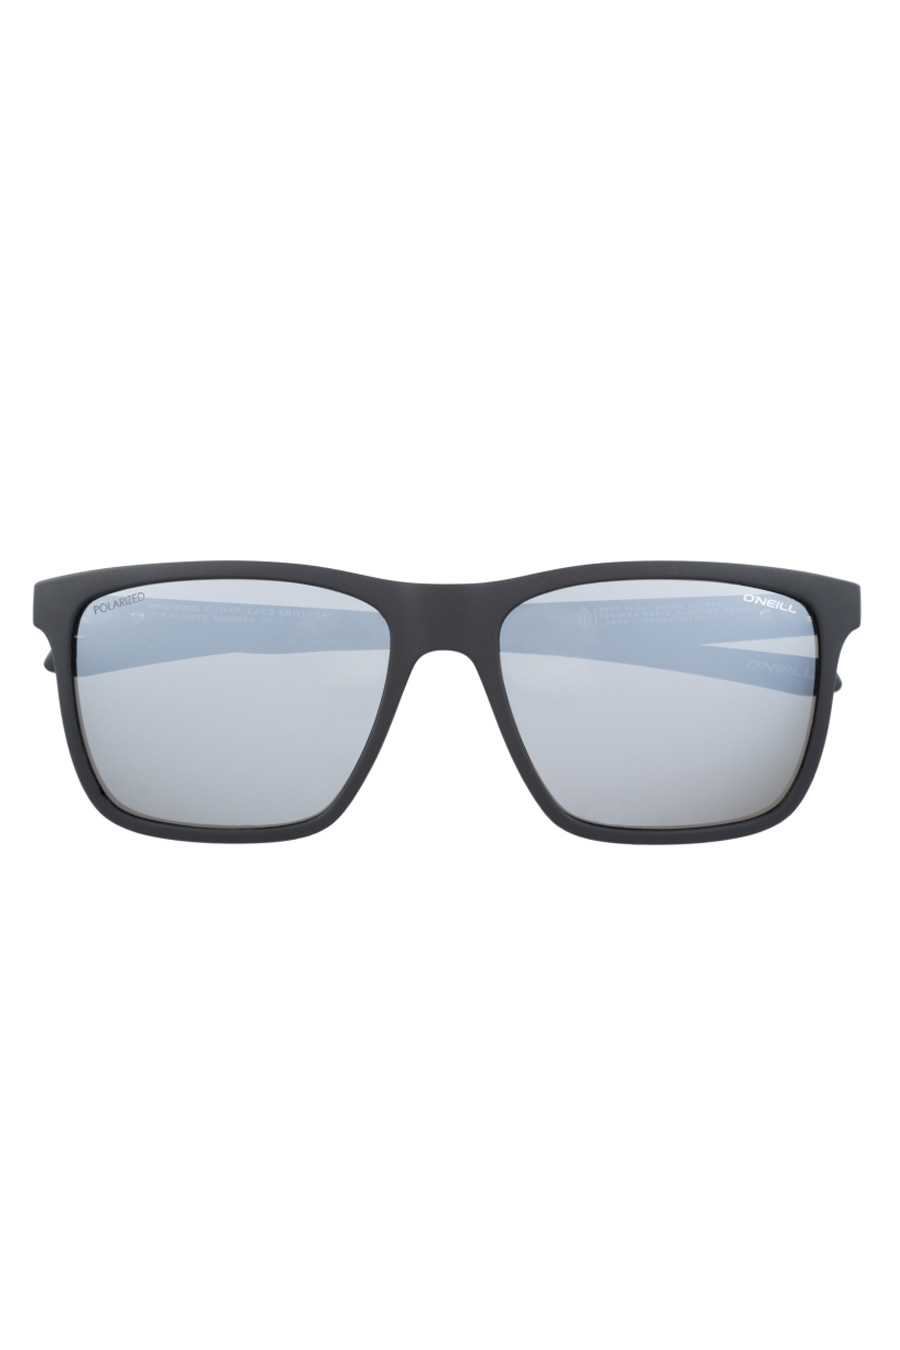 Солнечные очки ONEILL ONS-9005-20-104P